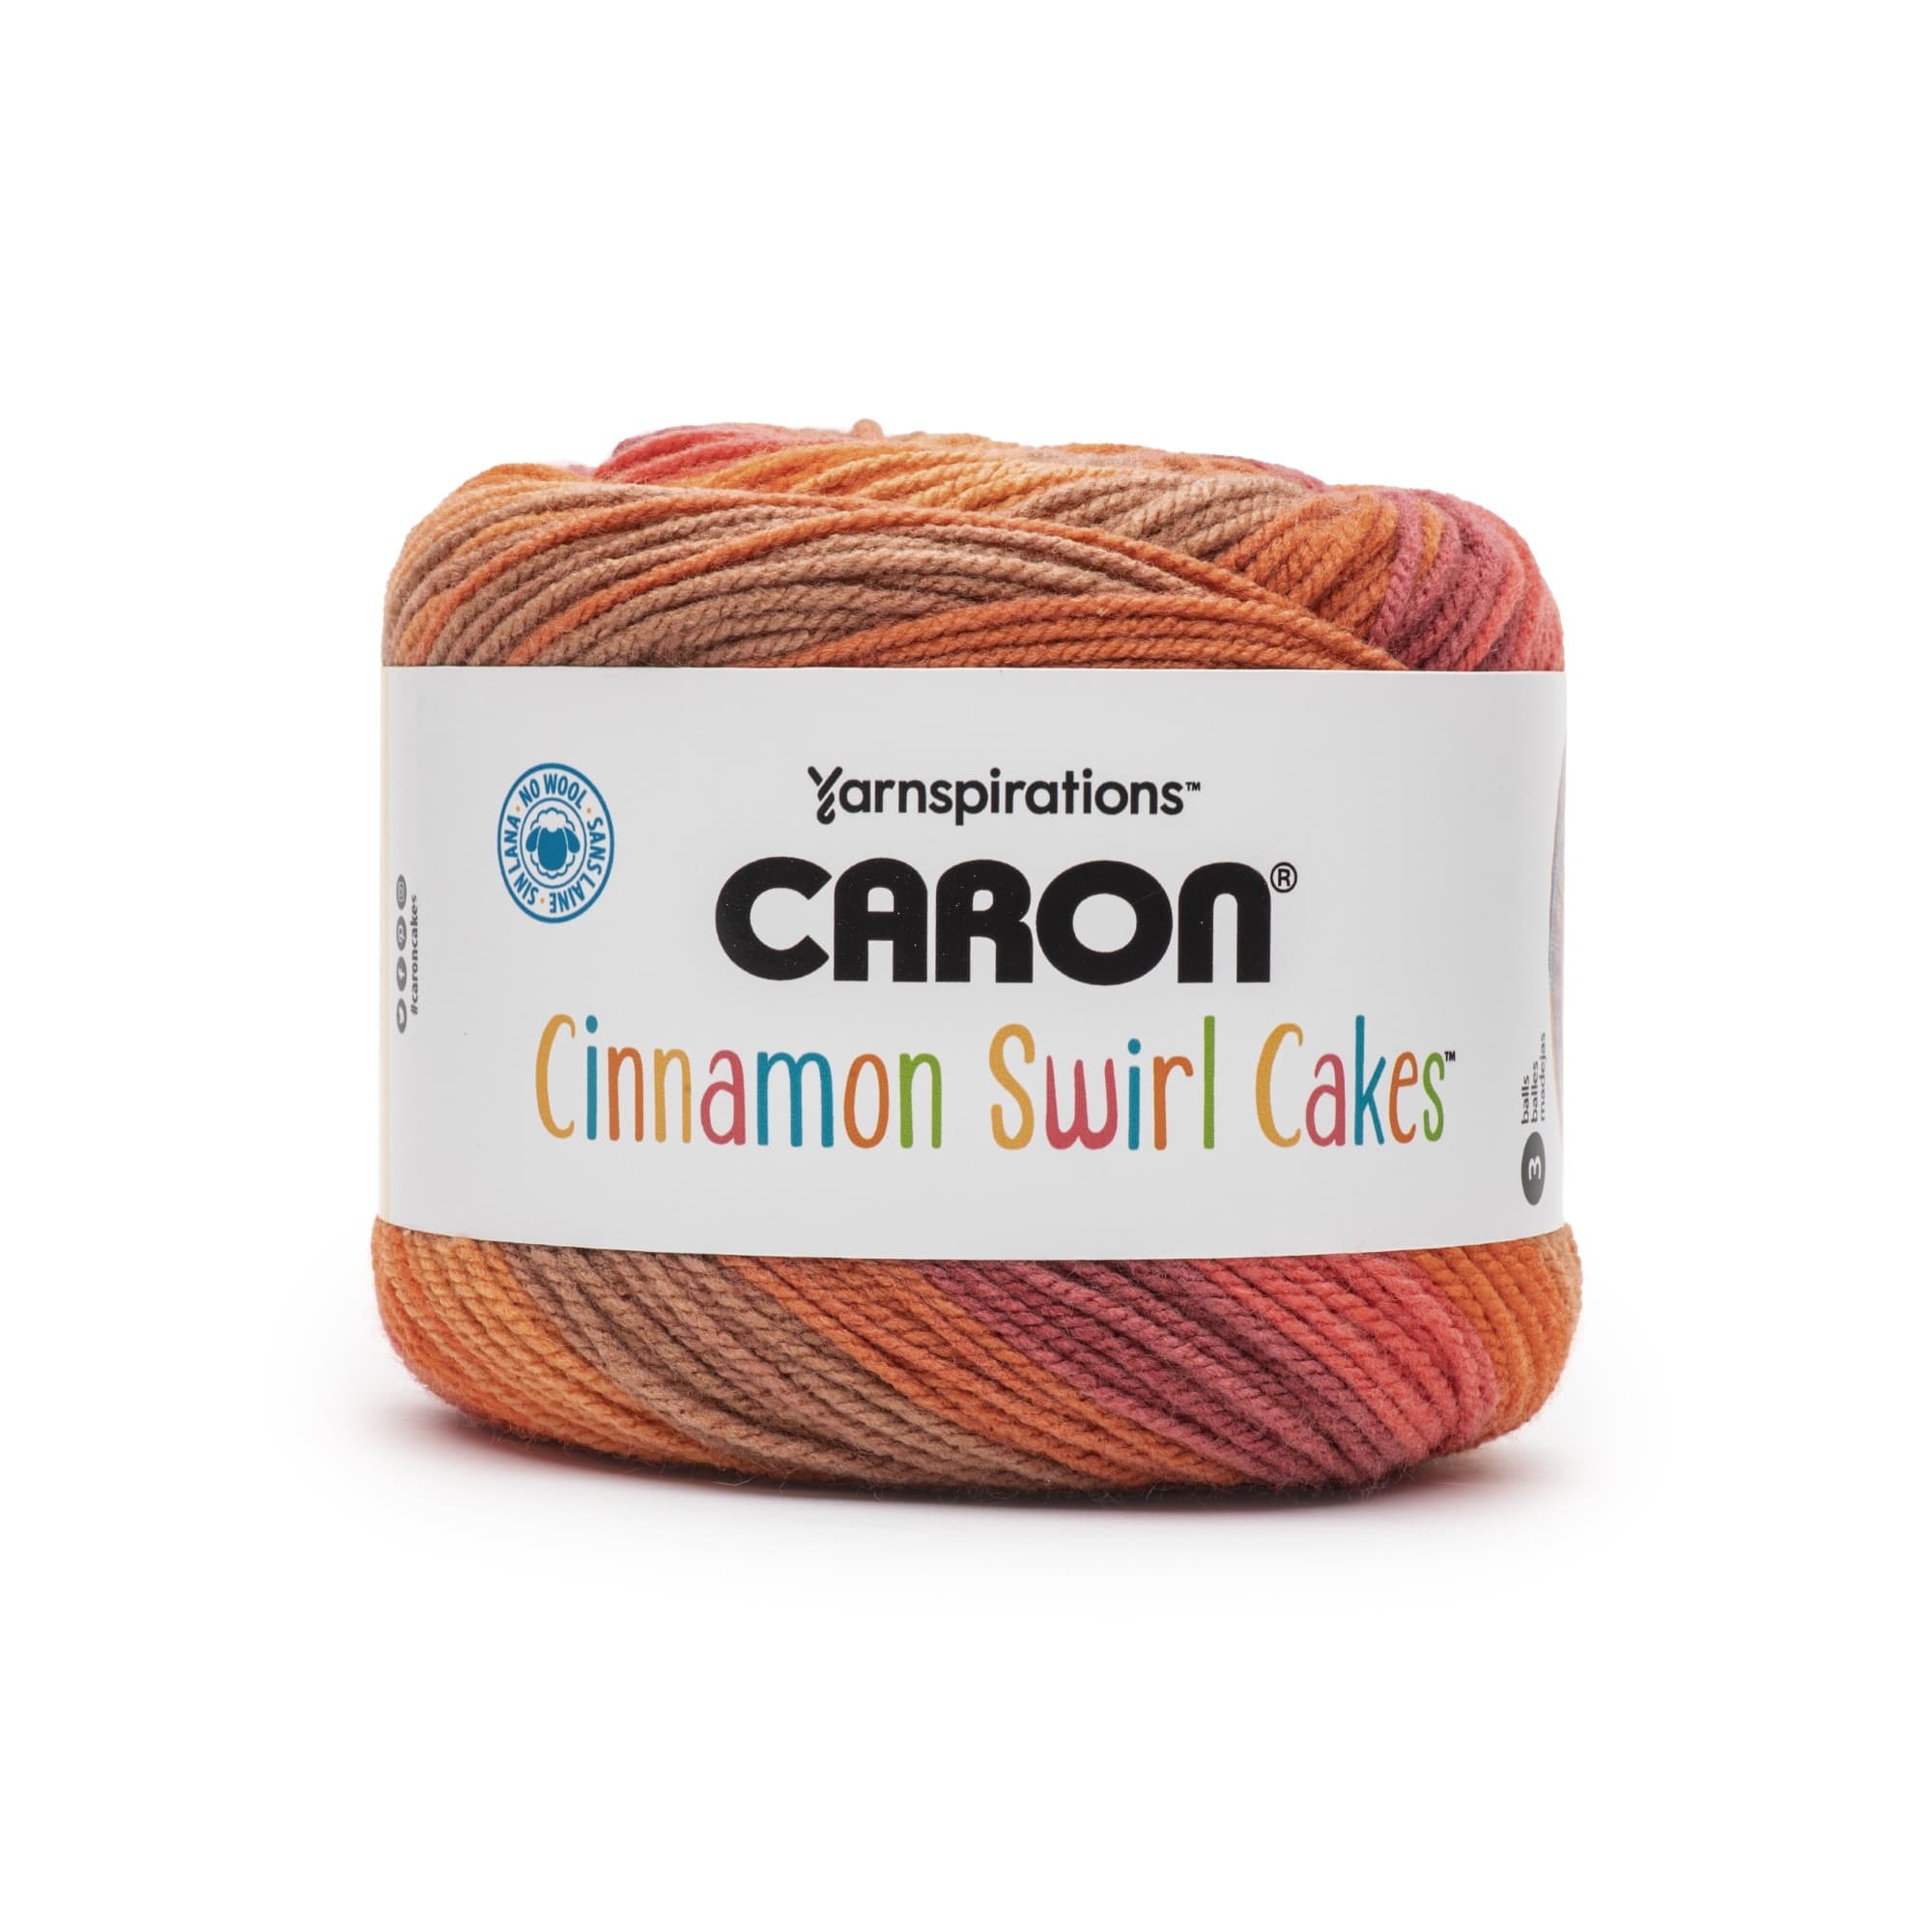 One 8 oz Skein Caron Cinnamon Swirl Cakes Yarn ~ 407 yds. Various Colors.  NEW